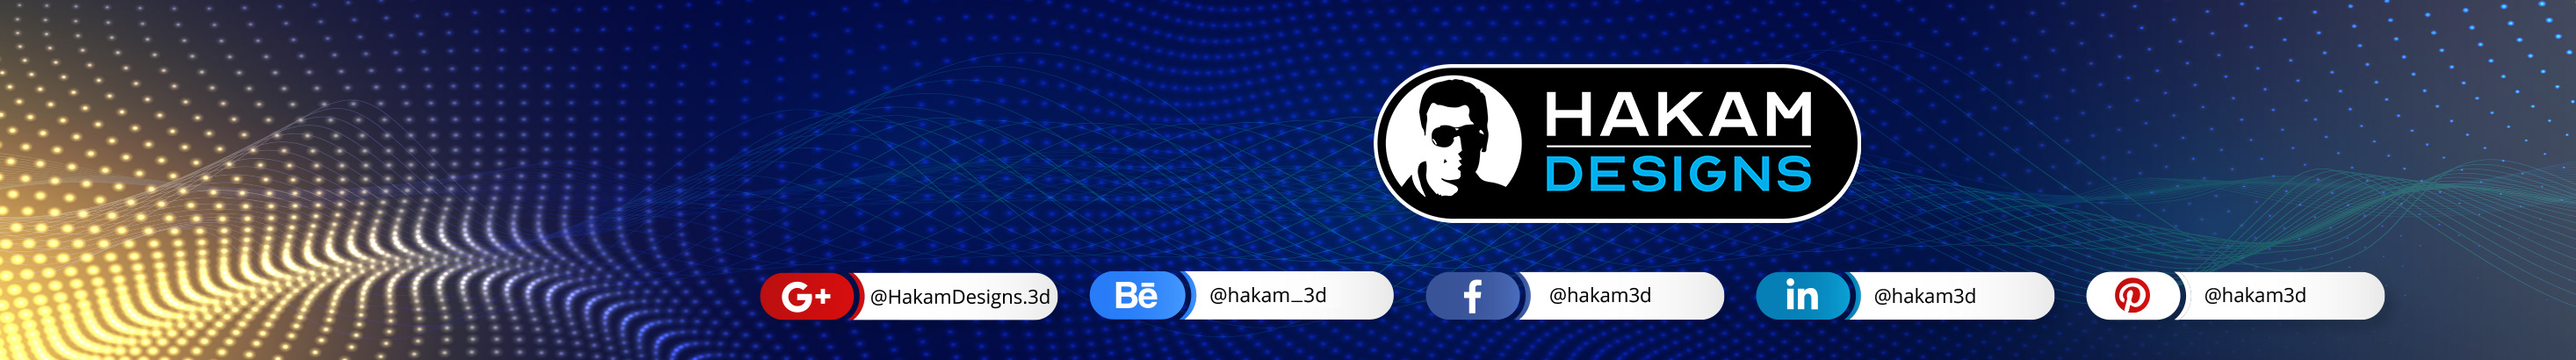 Mahmoud Hakam  ☆'s profile banner